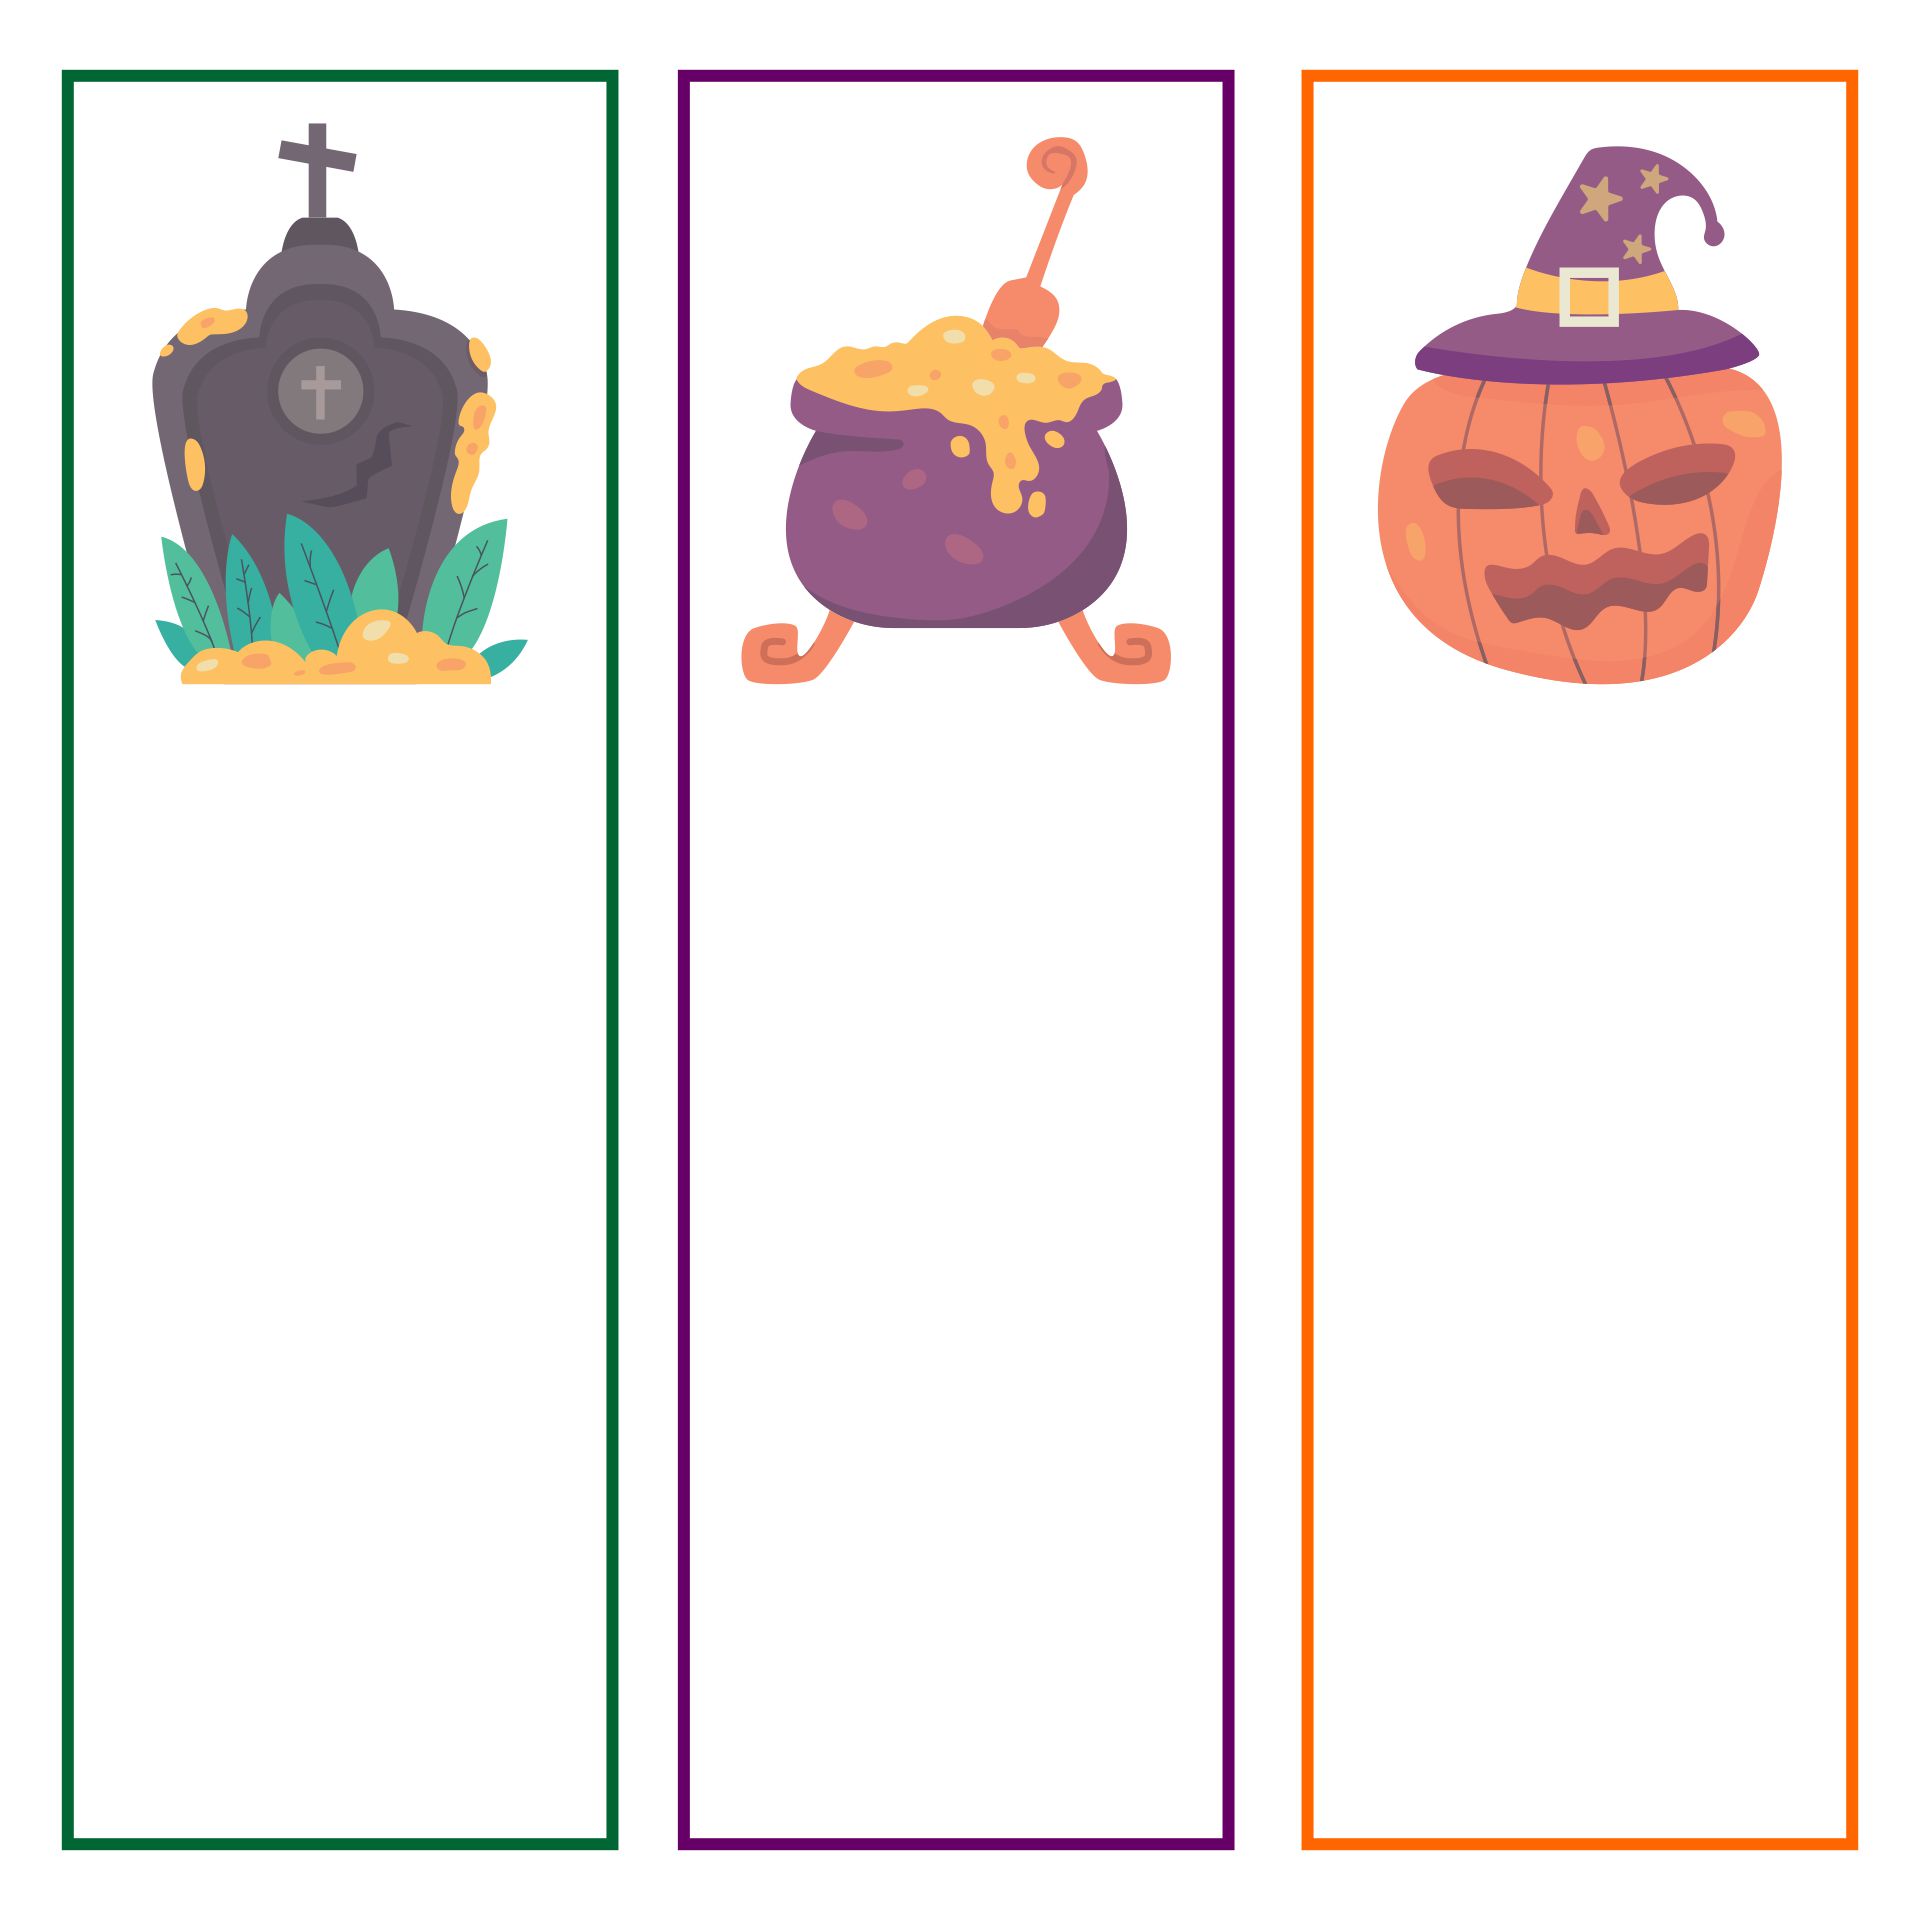 Blank Printable Bookmarks Halloween